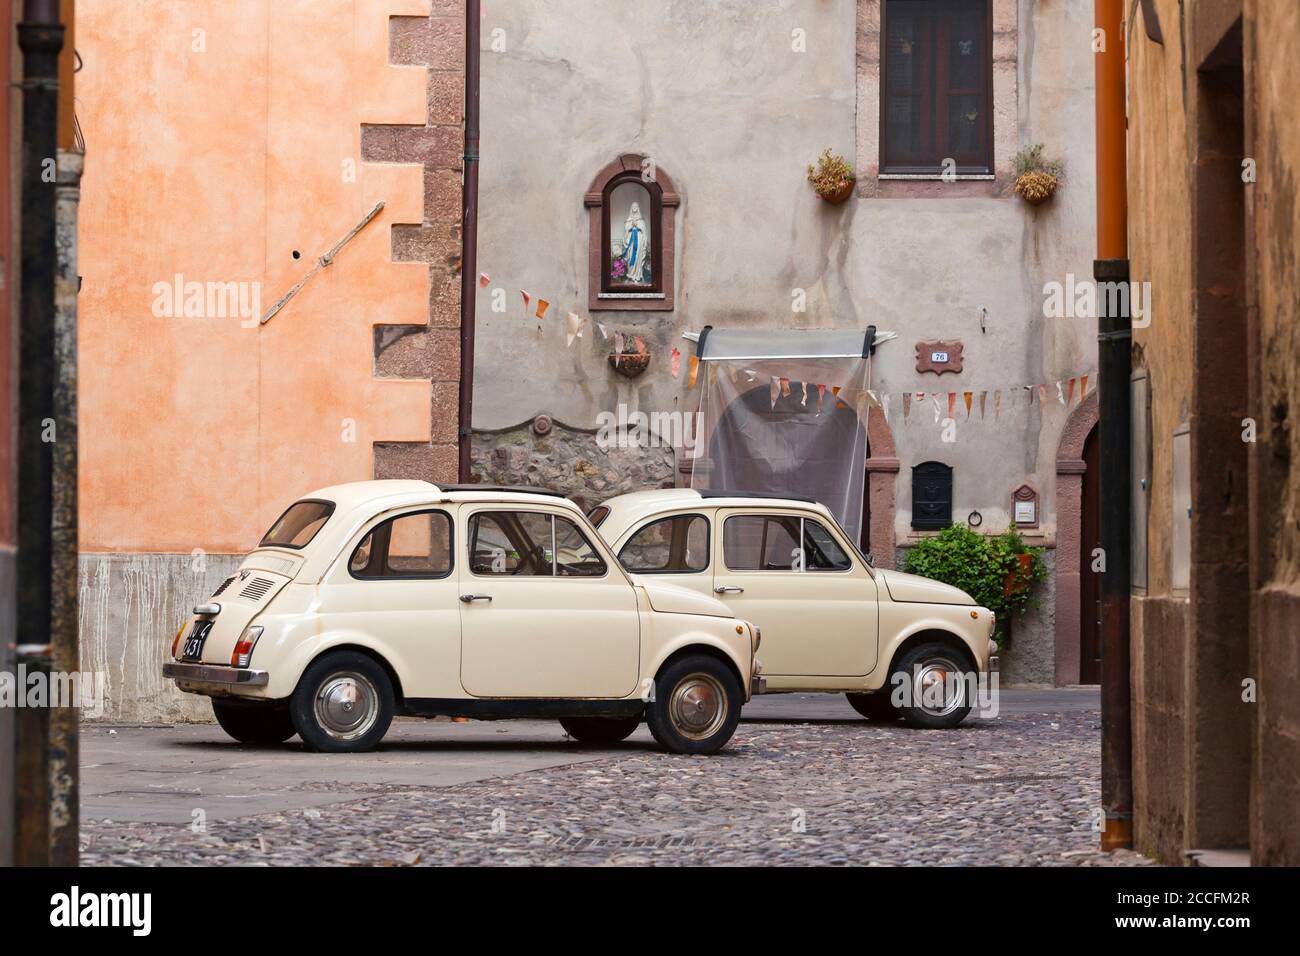 Fiat 500, Nuova, Cinquecento, car, vintage car, Italy, Stock Photo